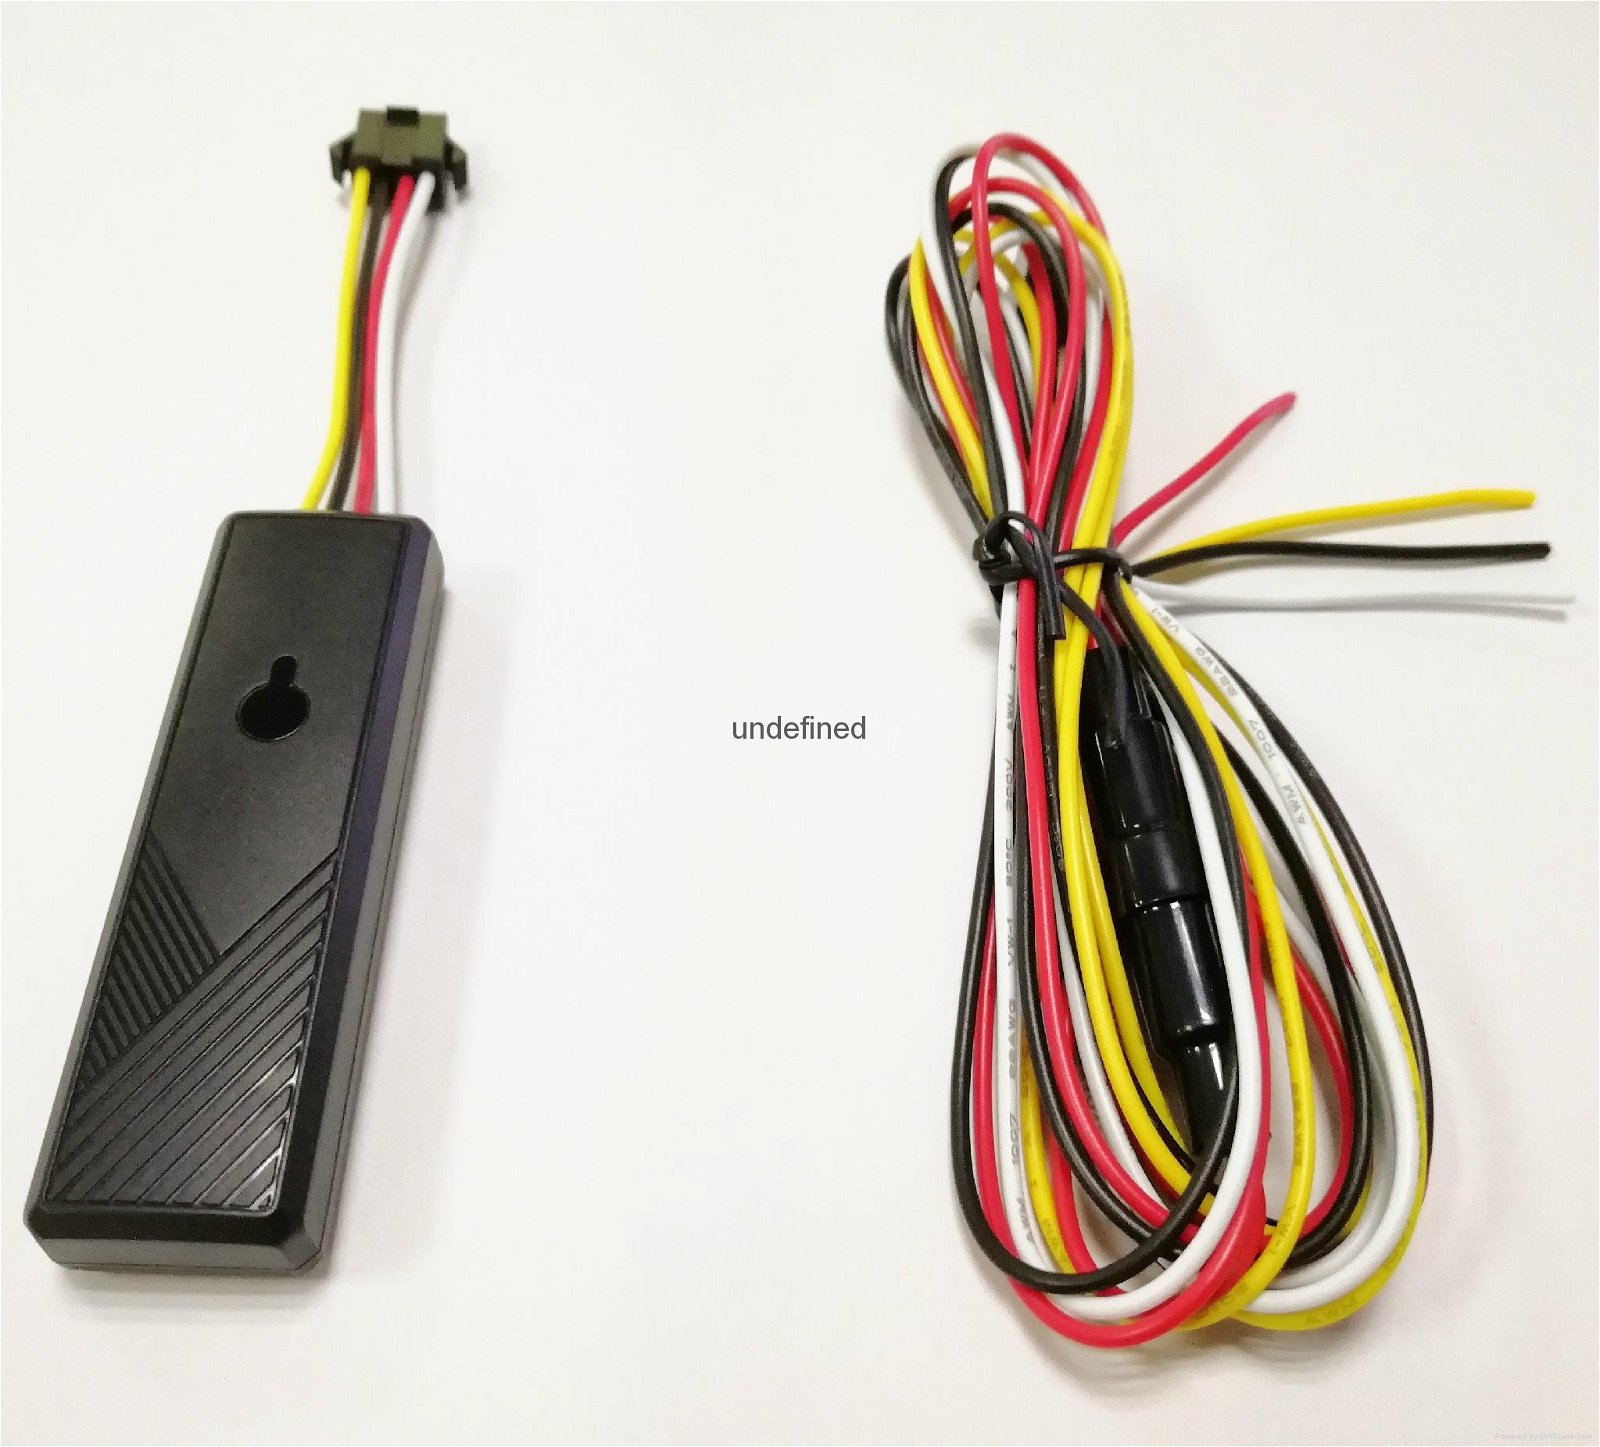 V.KEL VK-T100D electrombile GPS tracker volume minimum light perception alarm 